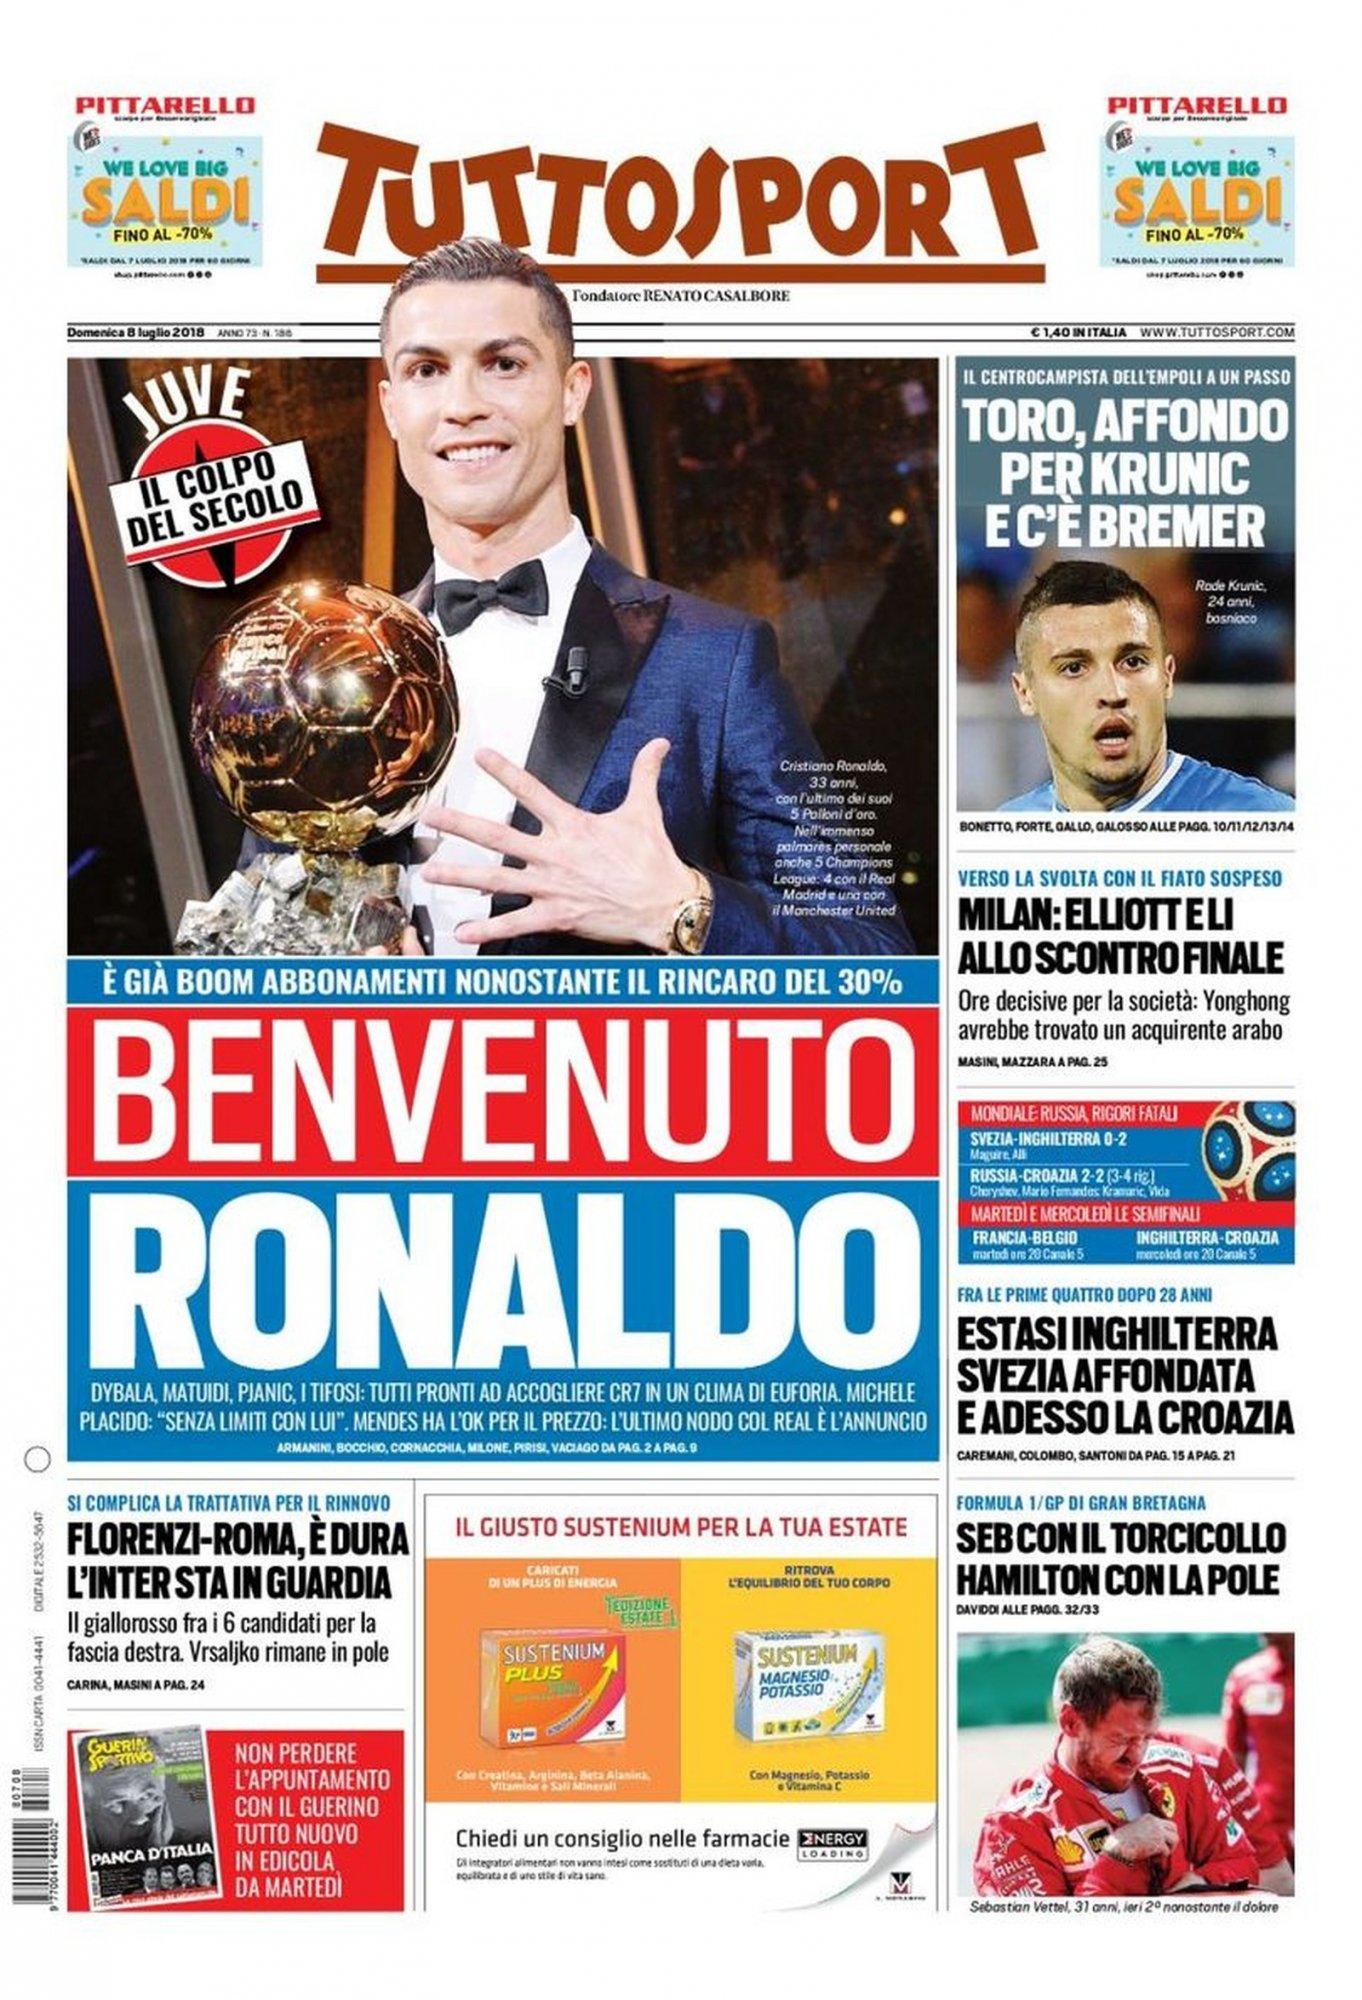 Capa do 'TuttoSport' dá as boas vindas a Cristiano Ronaldo